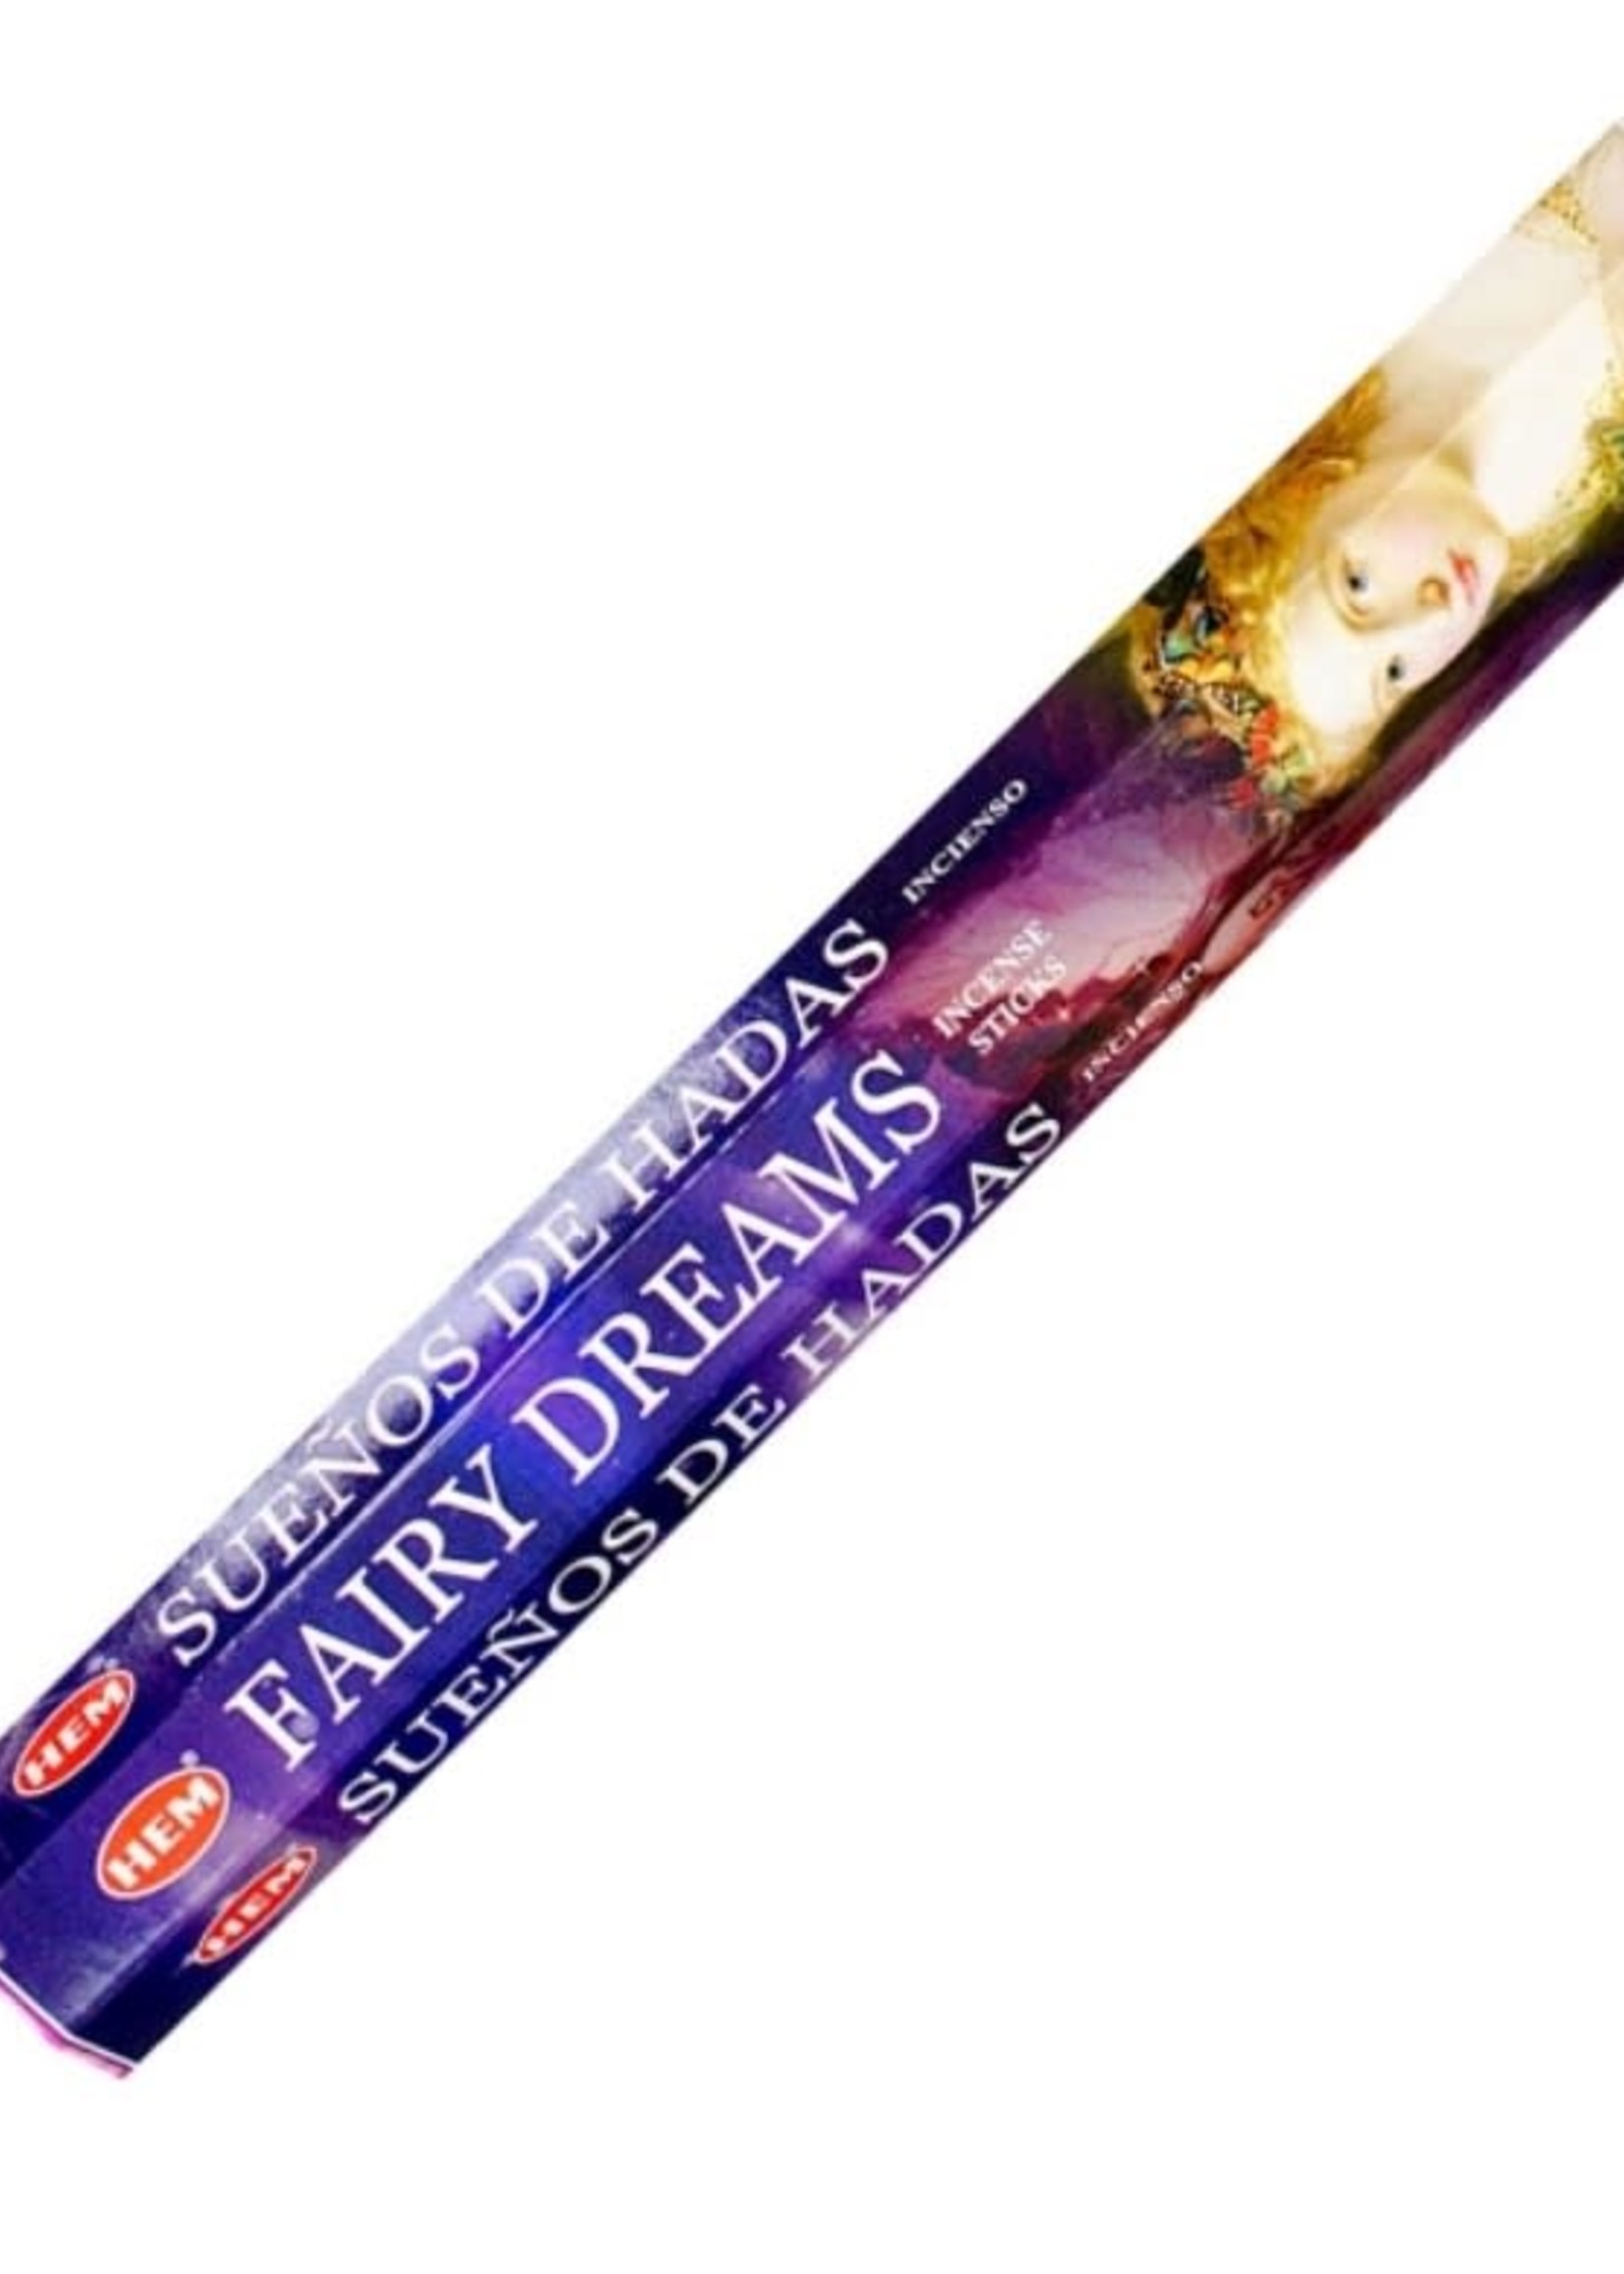 Hem 20g Incense Fairy Dreams